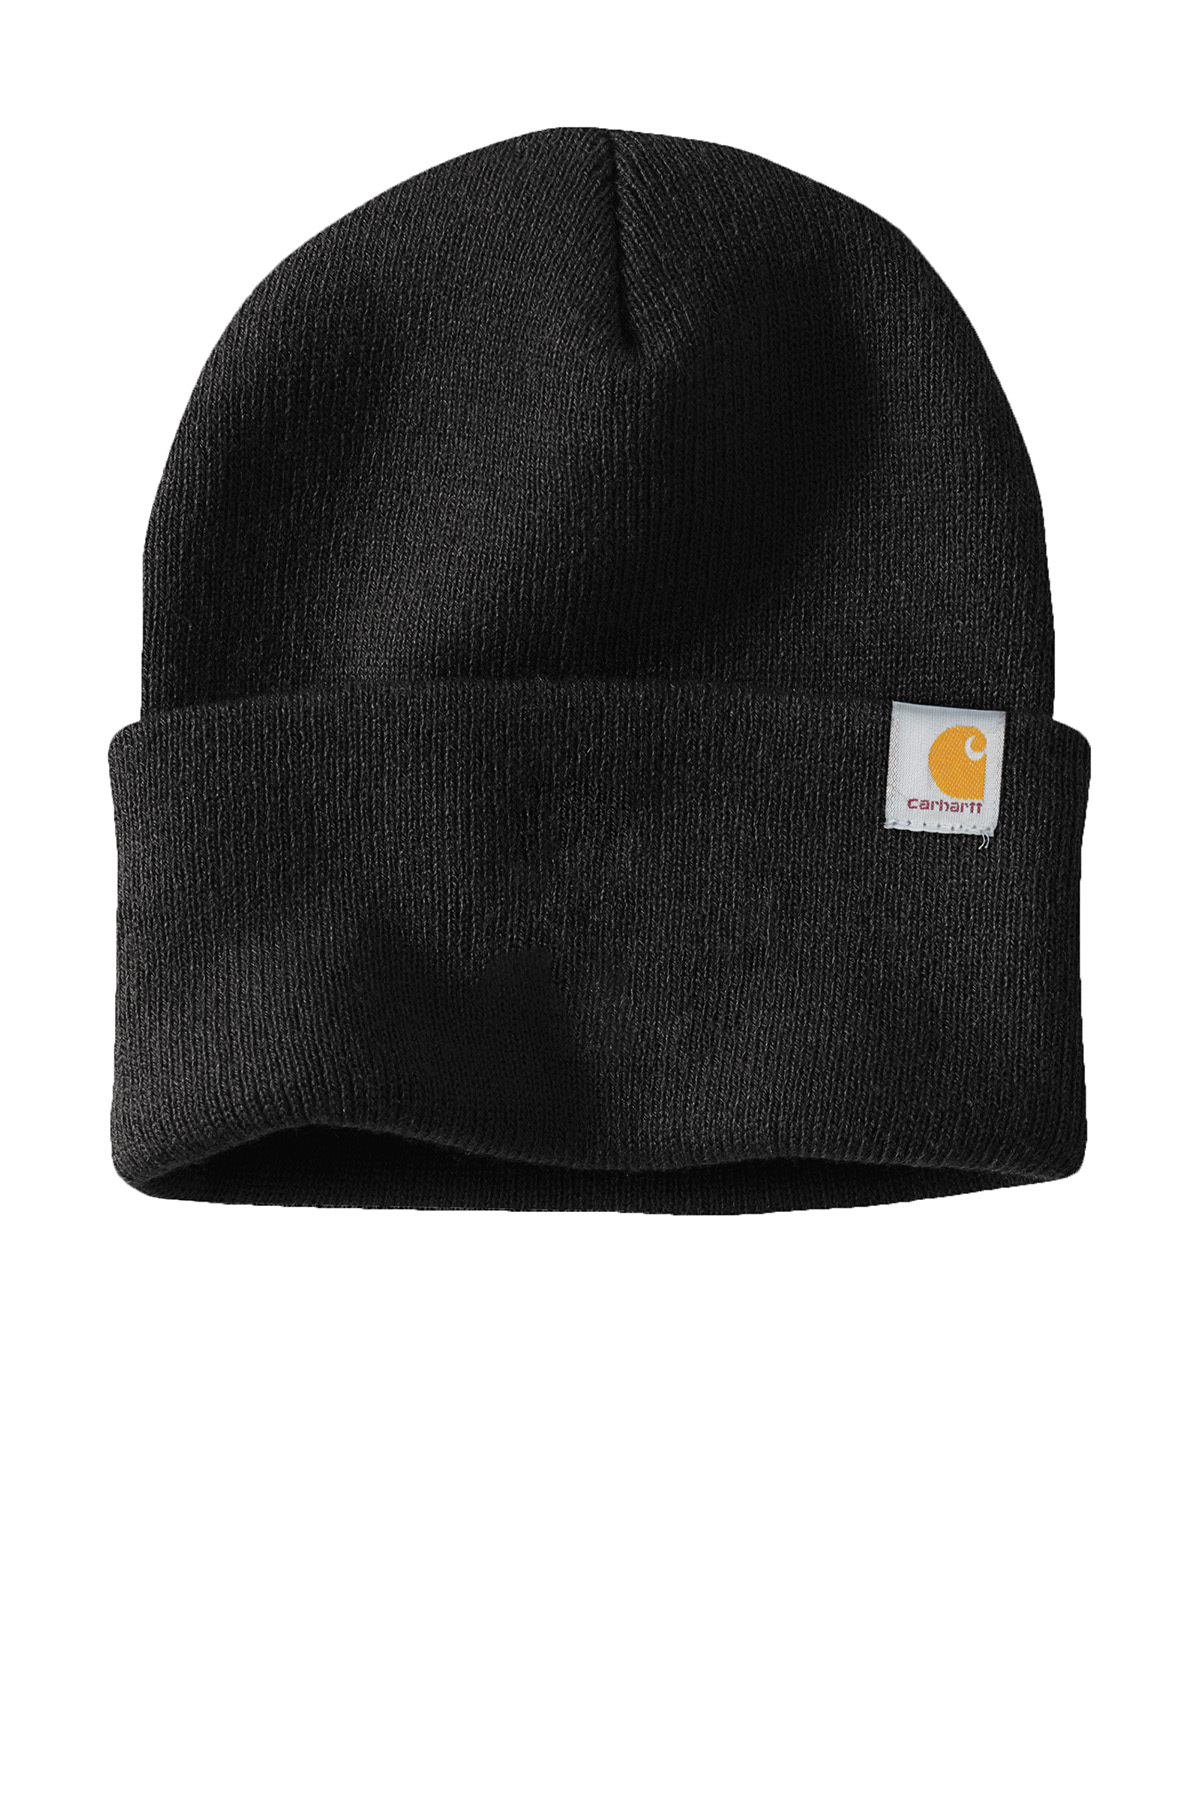 Marketing Long Knit Watchcap Beanies (Unisex), Hats, Caps & Visors